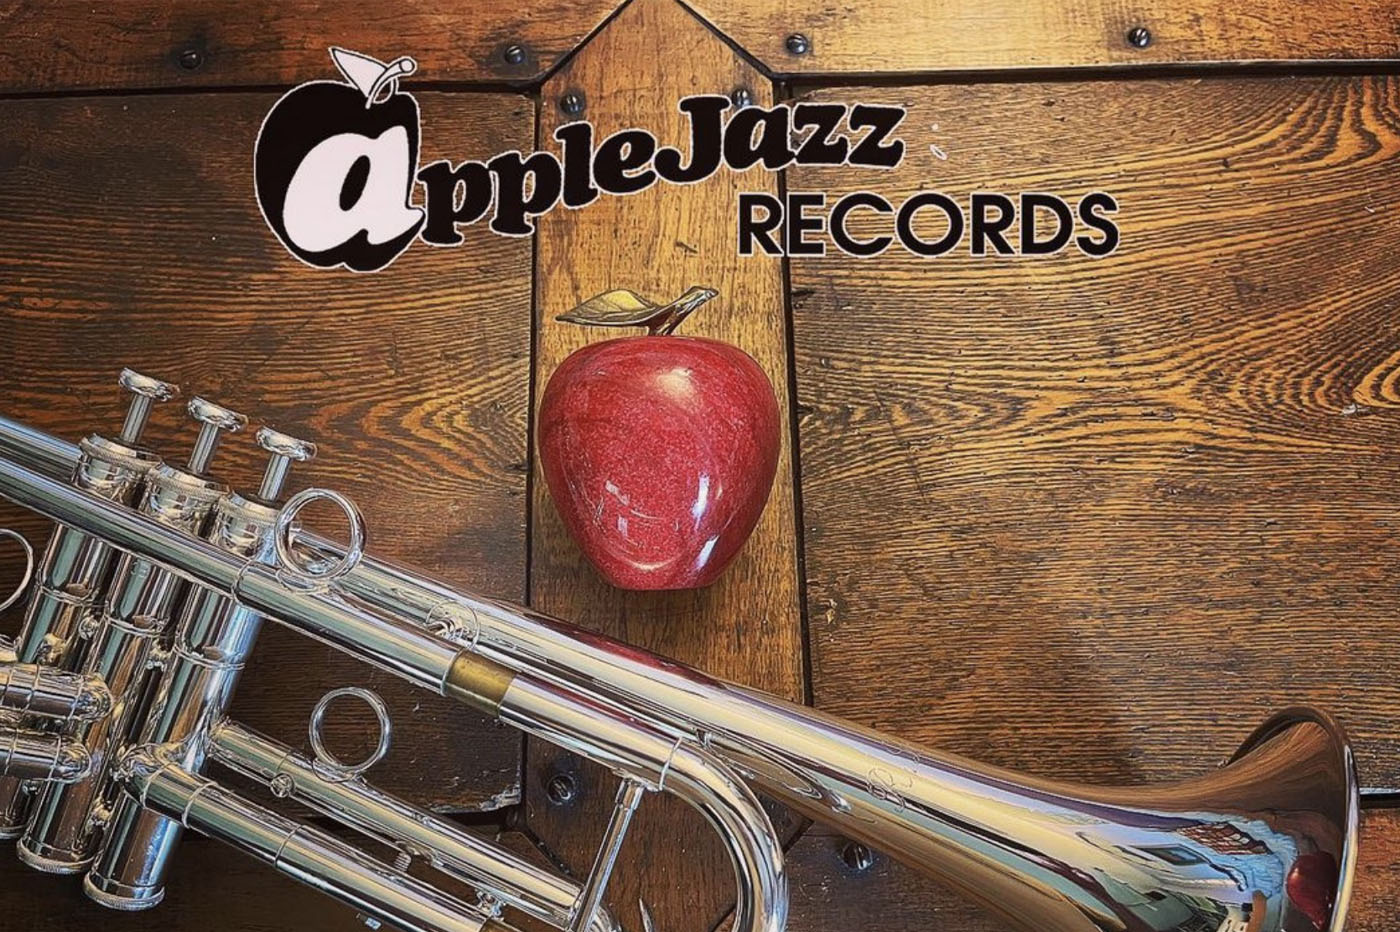 AppleJazz Records